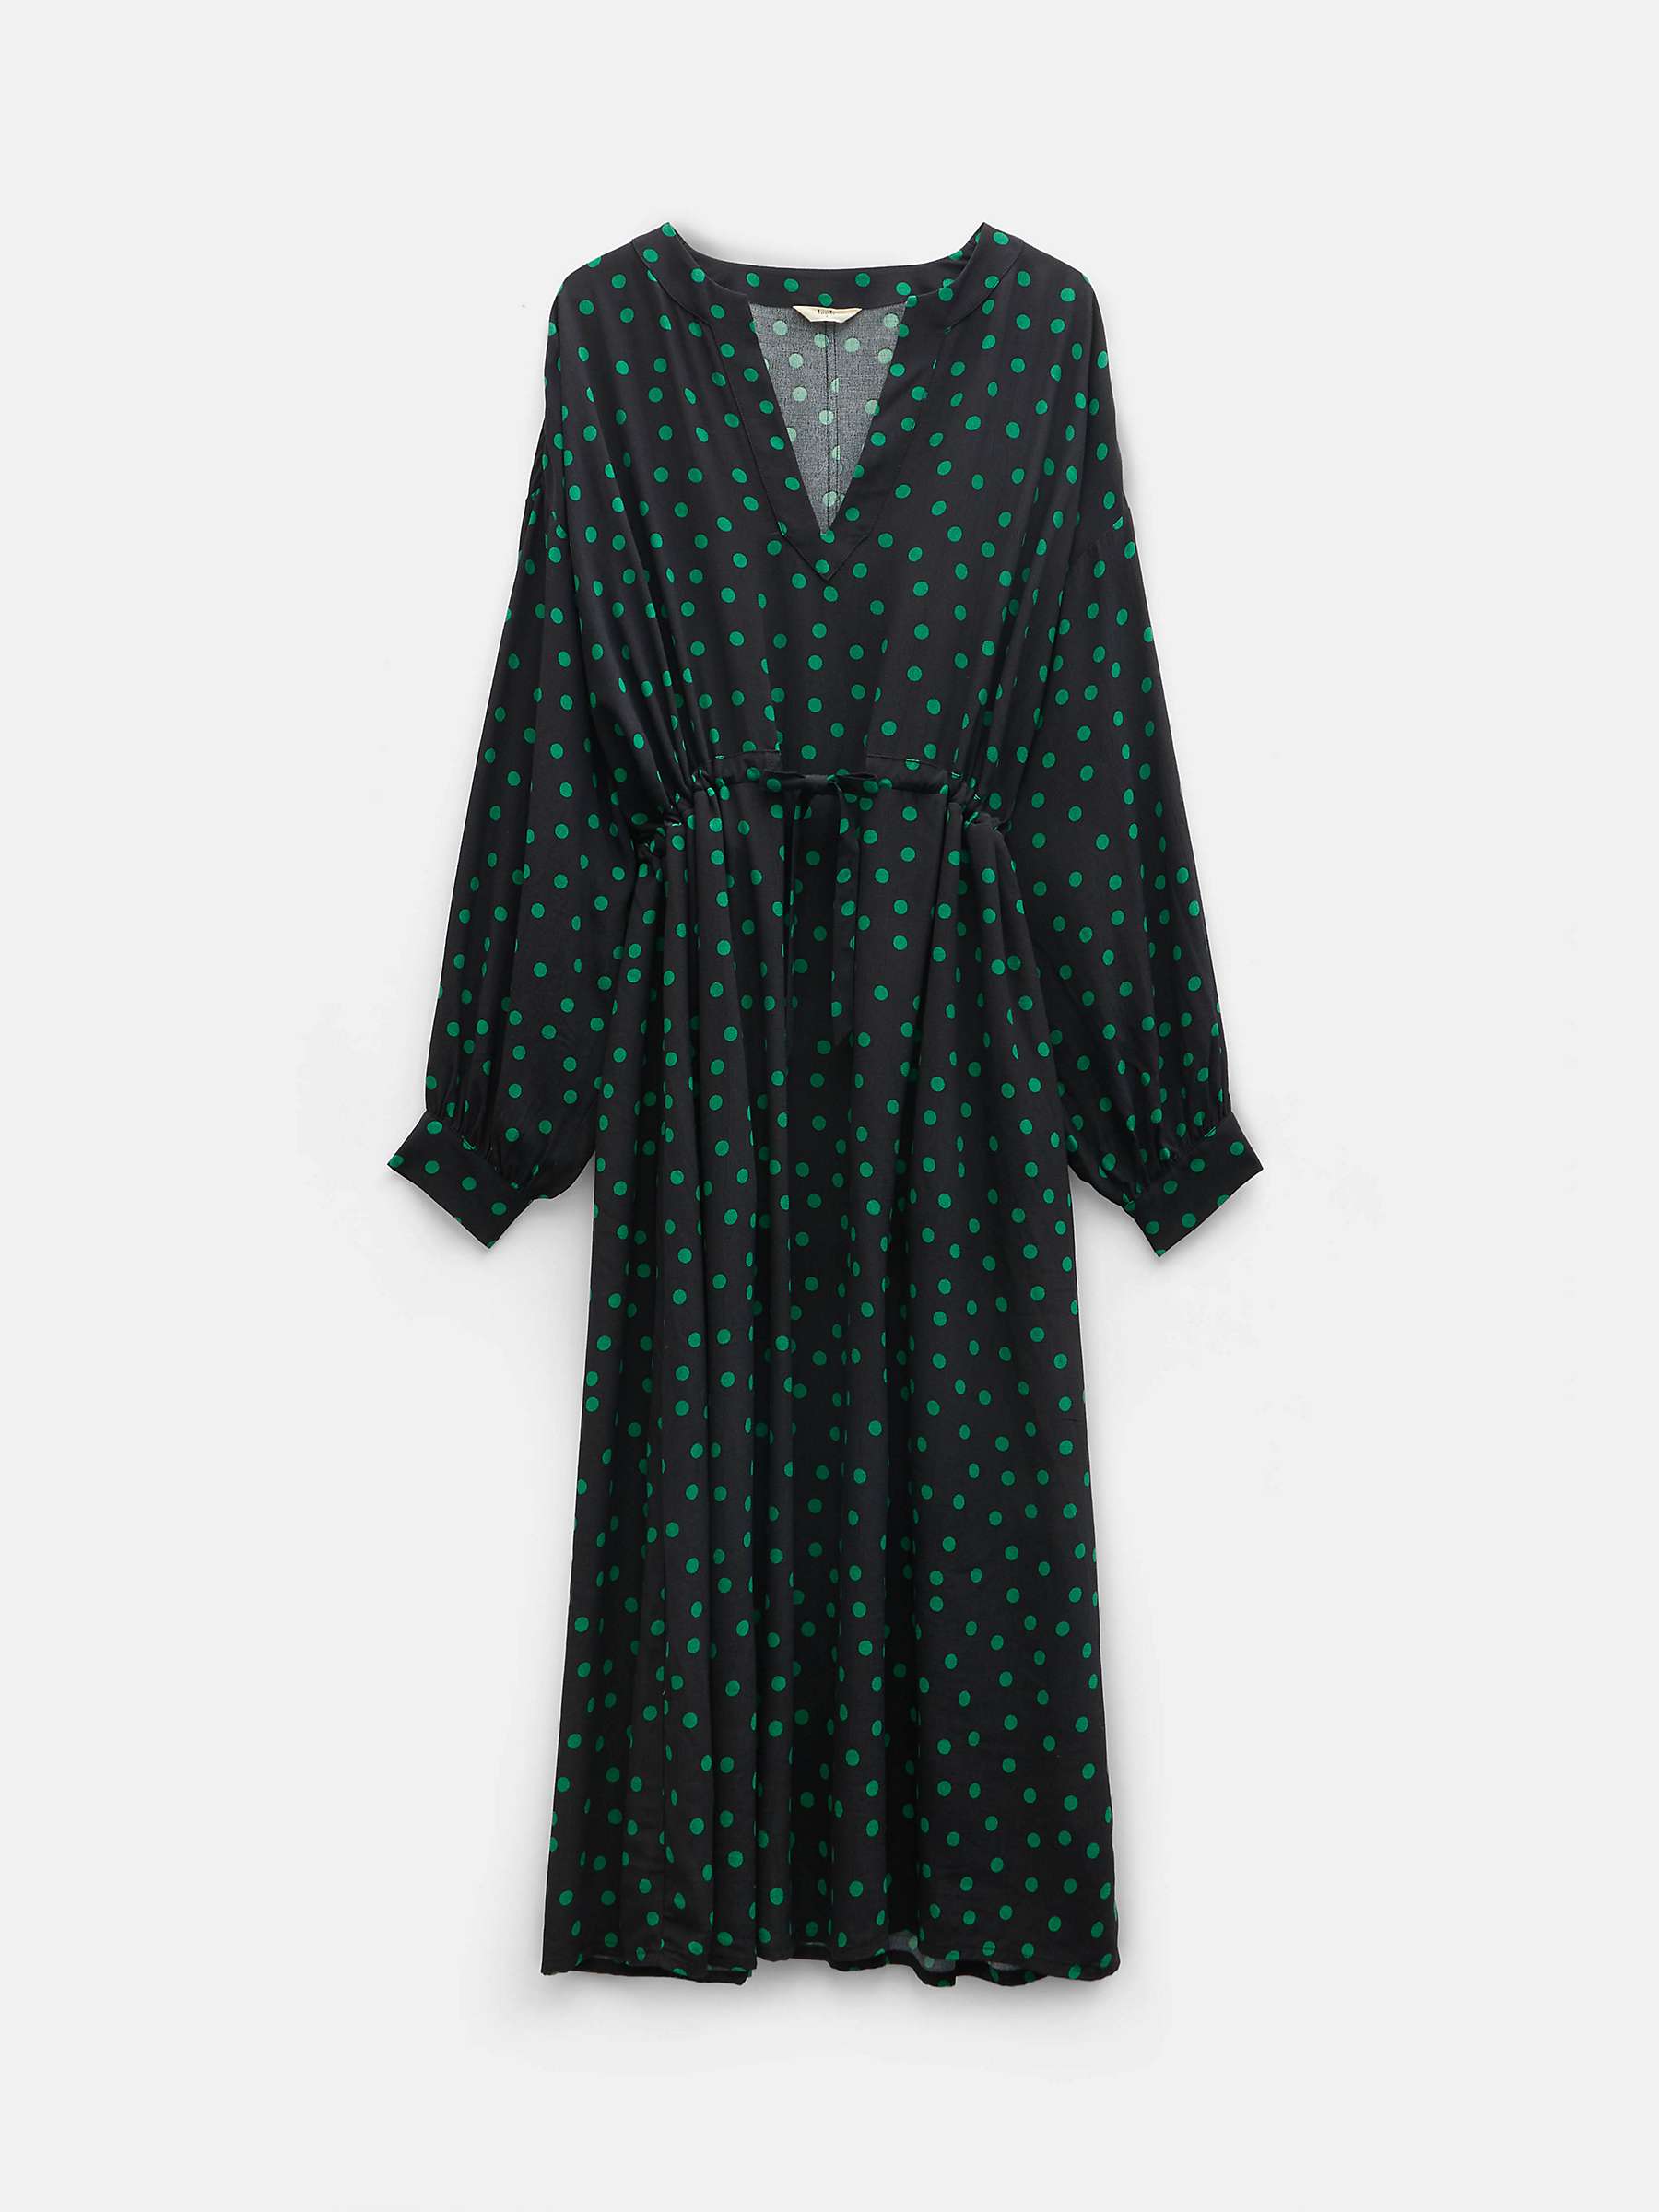 HUSH Aimee Polka Dot Maxi Dress, Black/Green at John Lewis & Partners